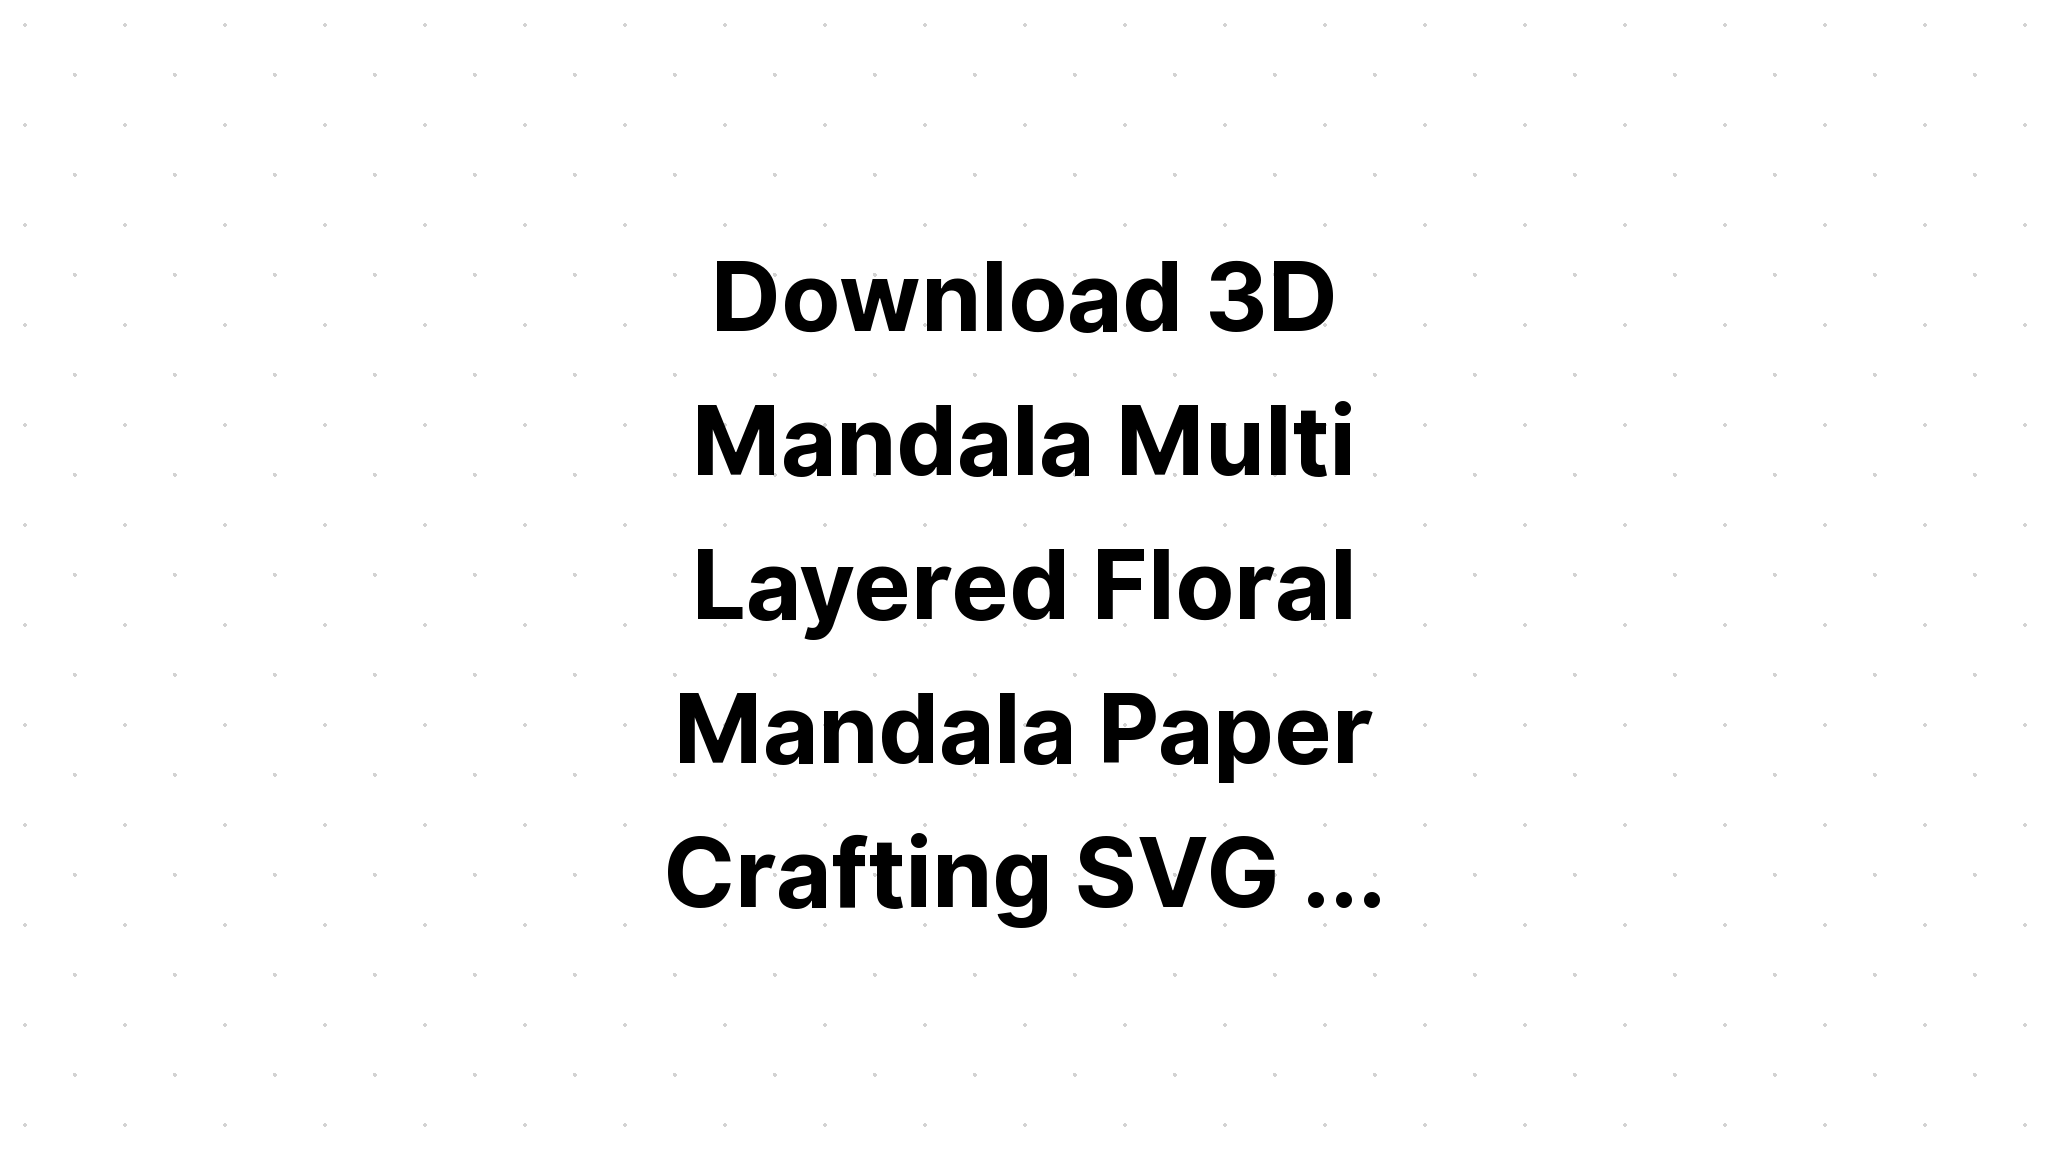 Download 3D Layered Cross 3D Mandala Svg FreeSVG Files